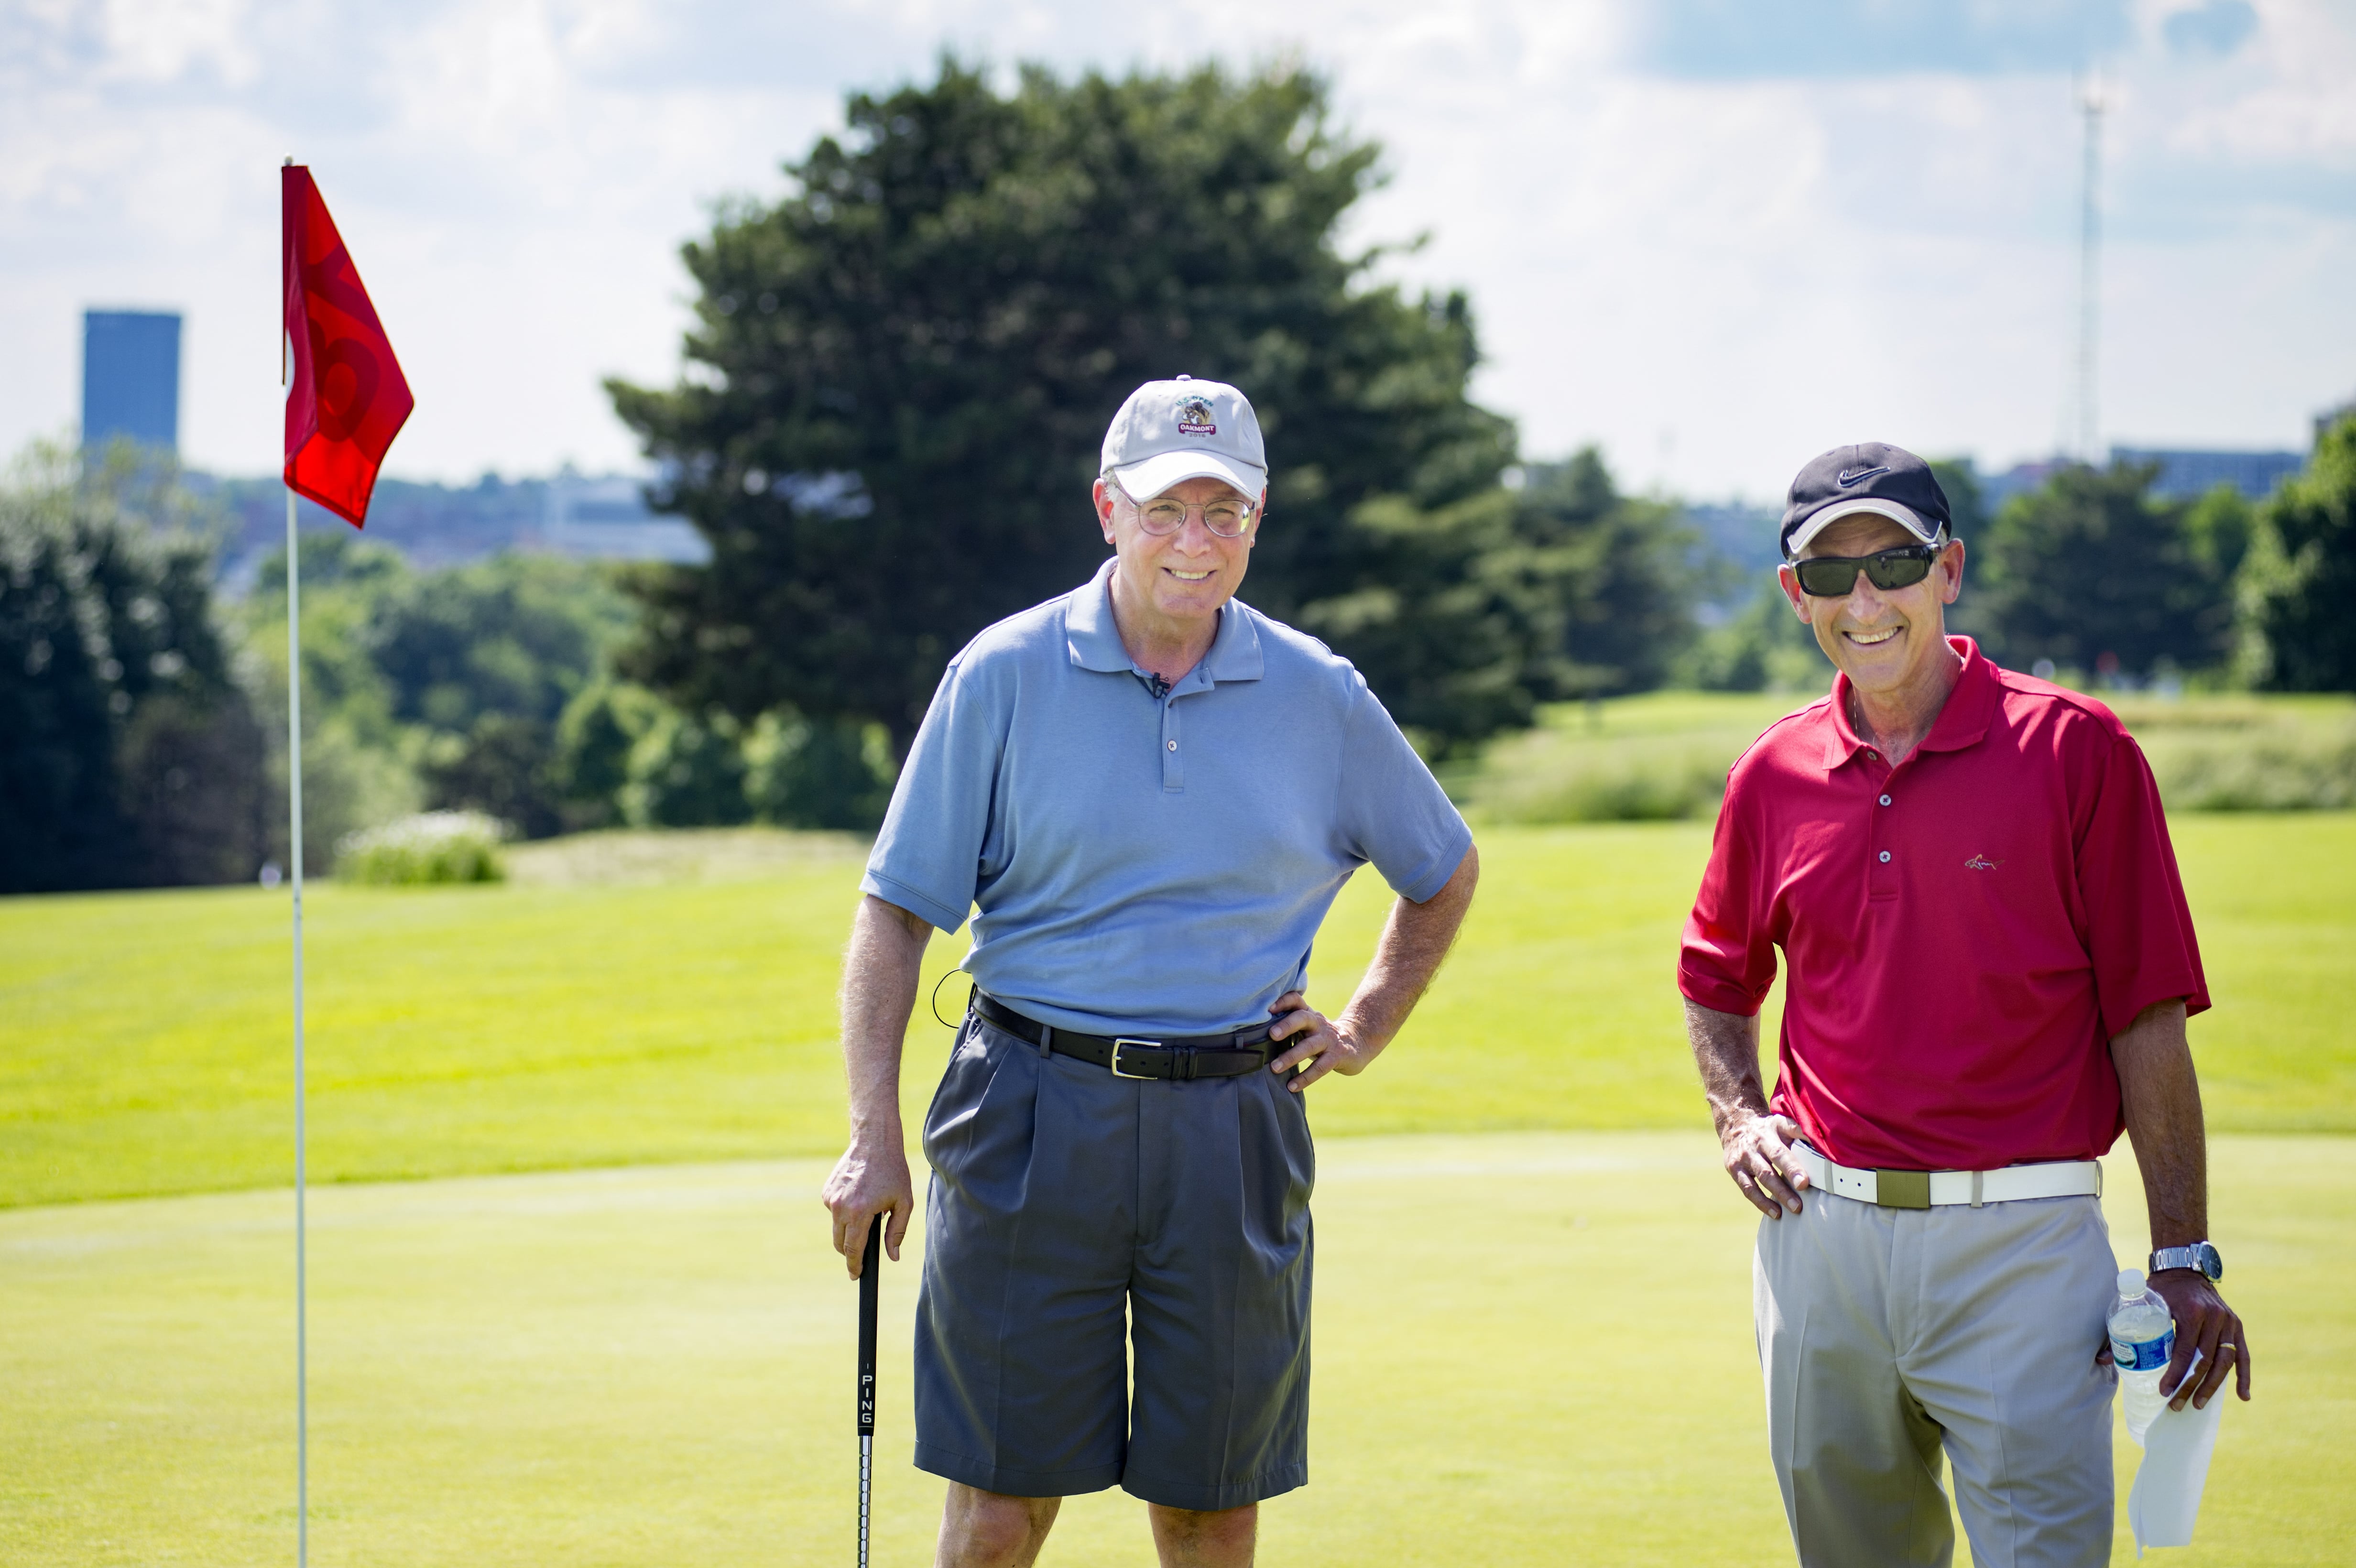 Bruce Gerson and Steven Schlossman on the golf course